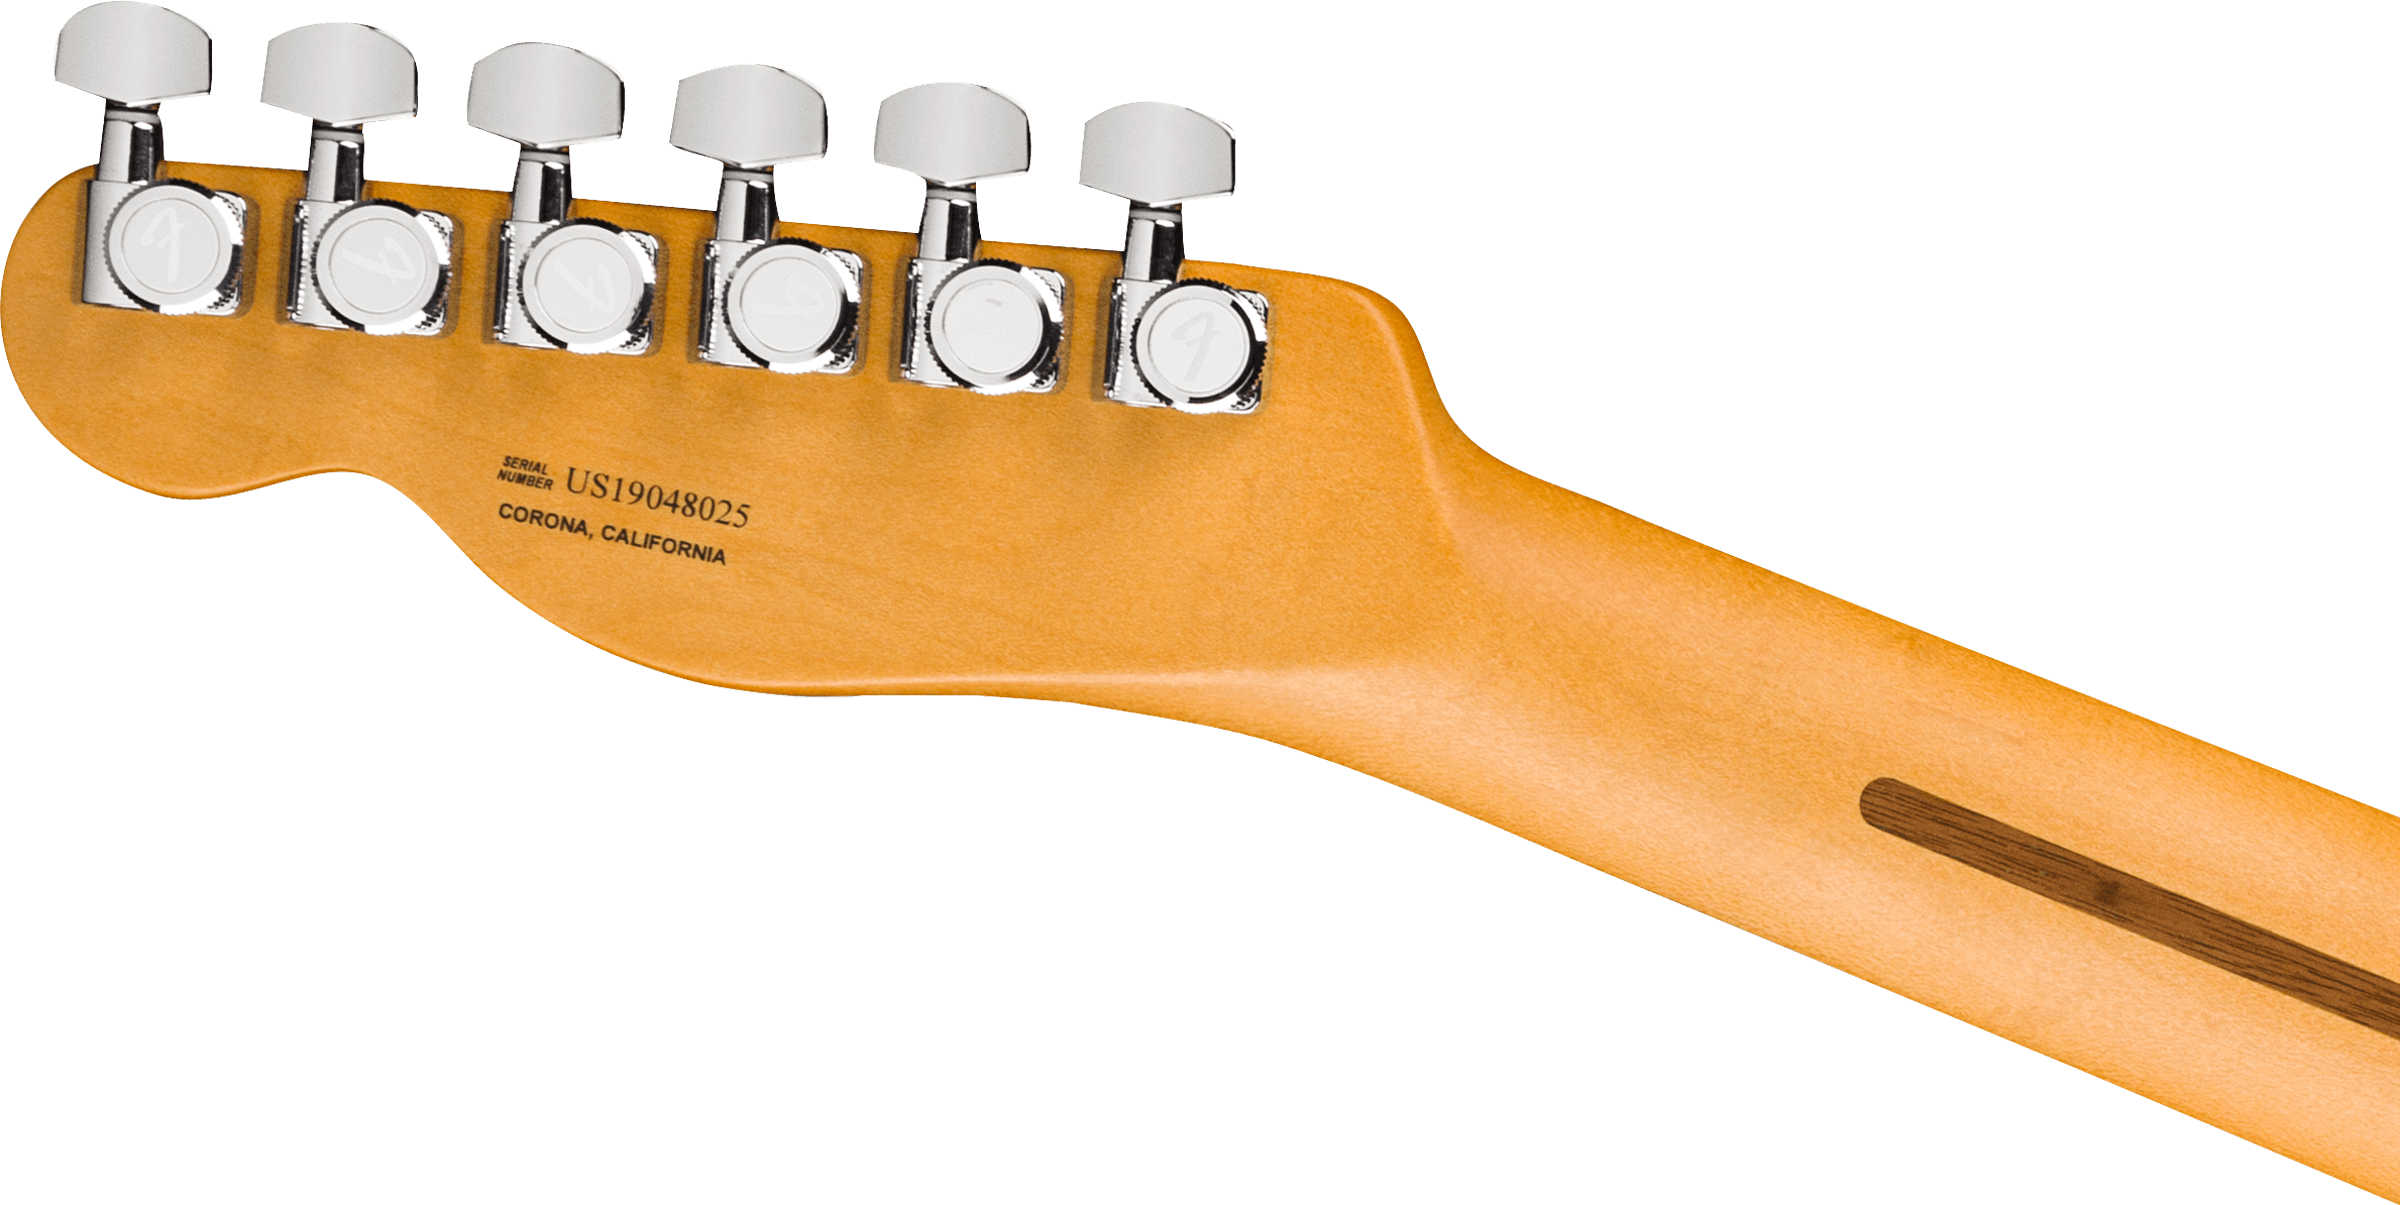 Fender American Ultra Telecaster Rosewood Fingerboard Ultraburst 0118030712